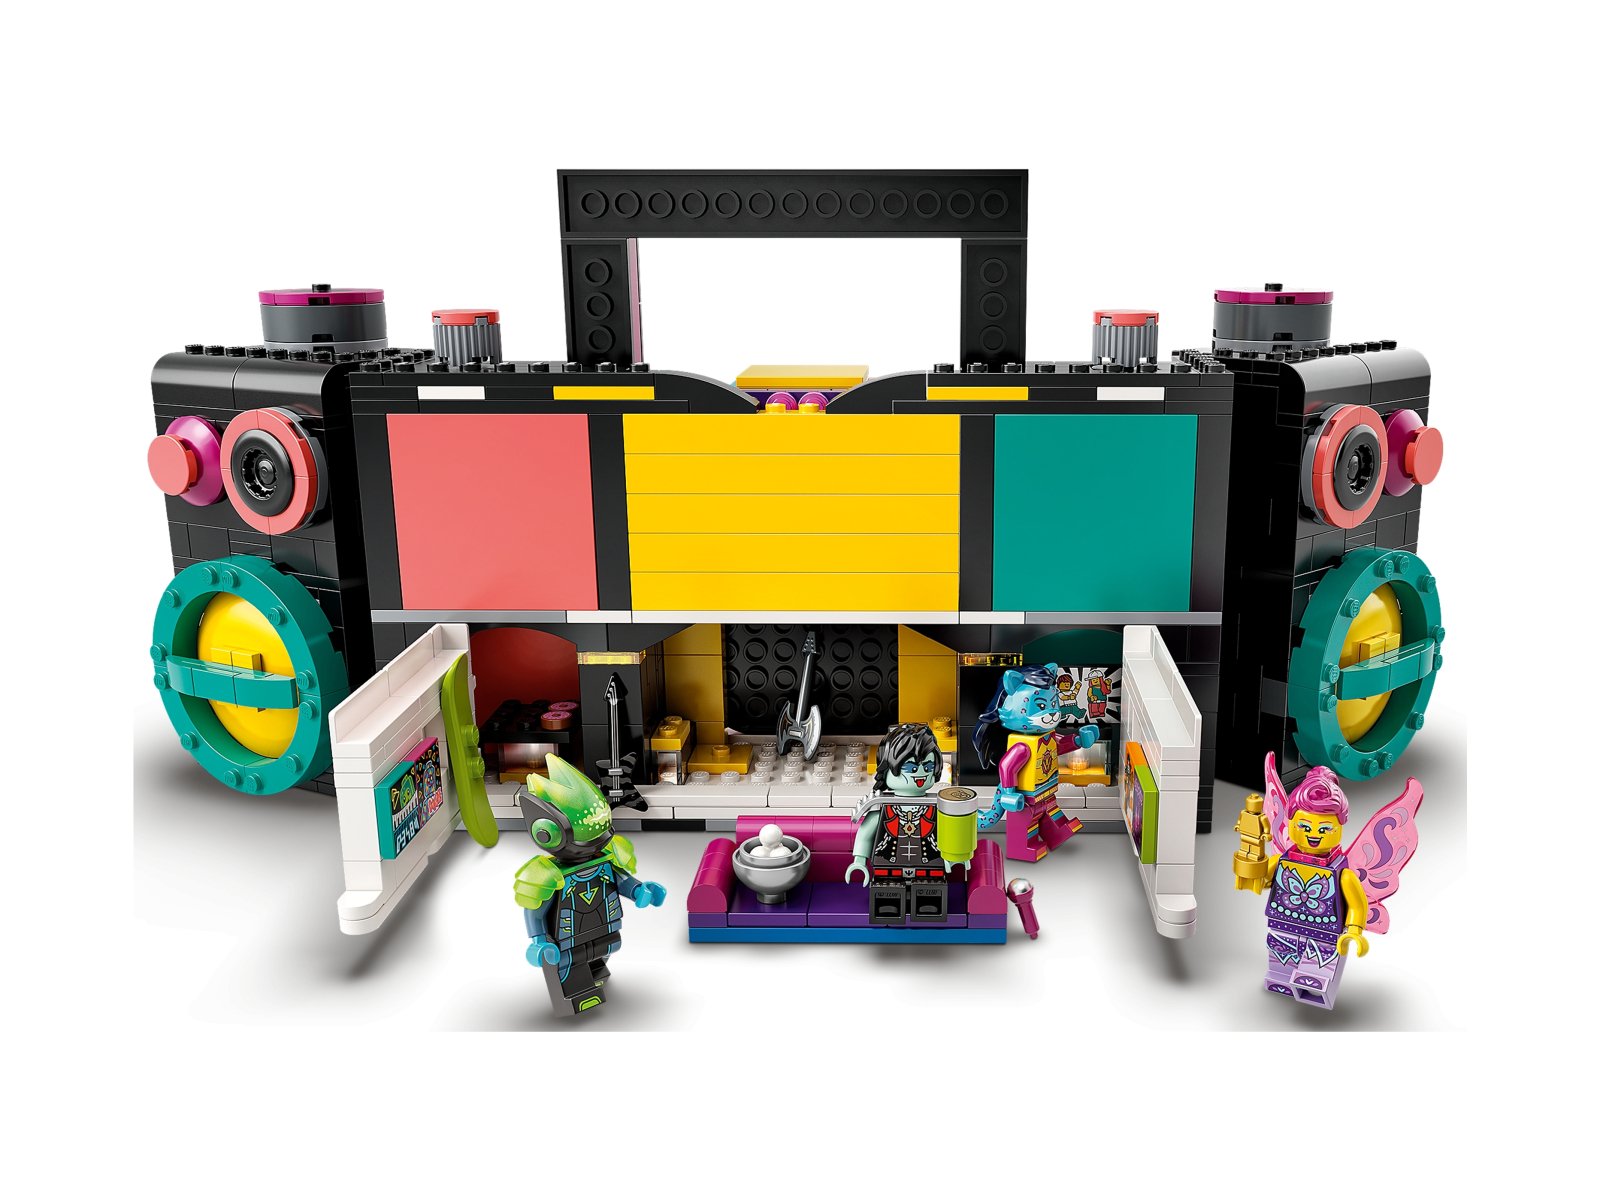 LEGO VIDIYO The Boombox 43115